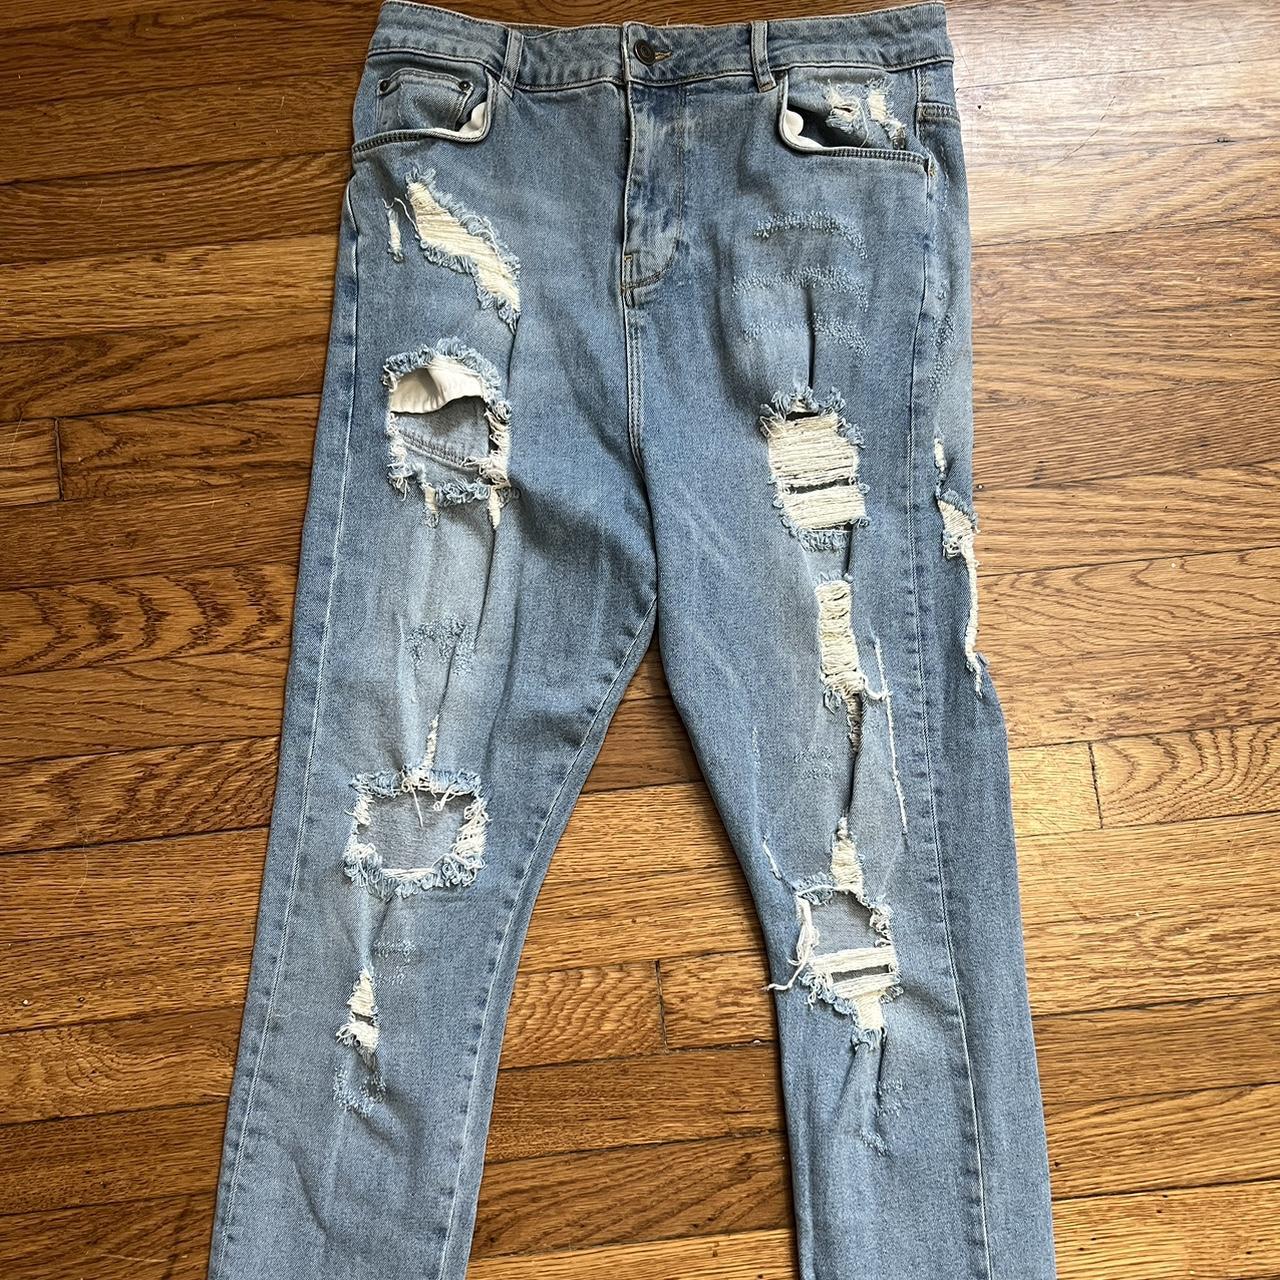 Drop crotch men’s jeans. Size 31w x 30L - Depop